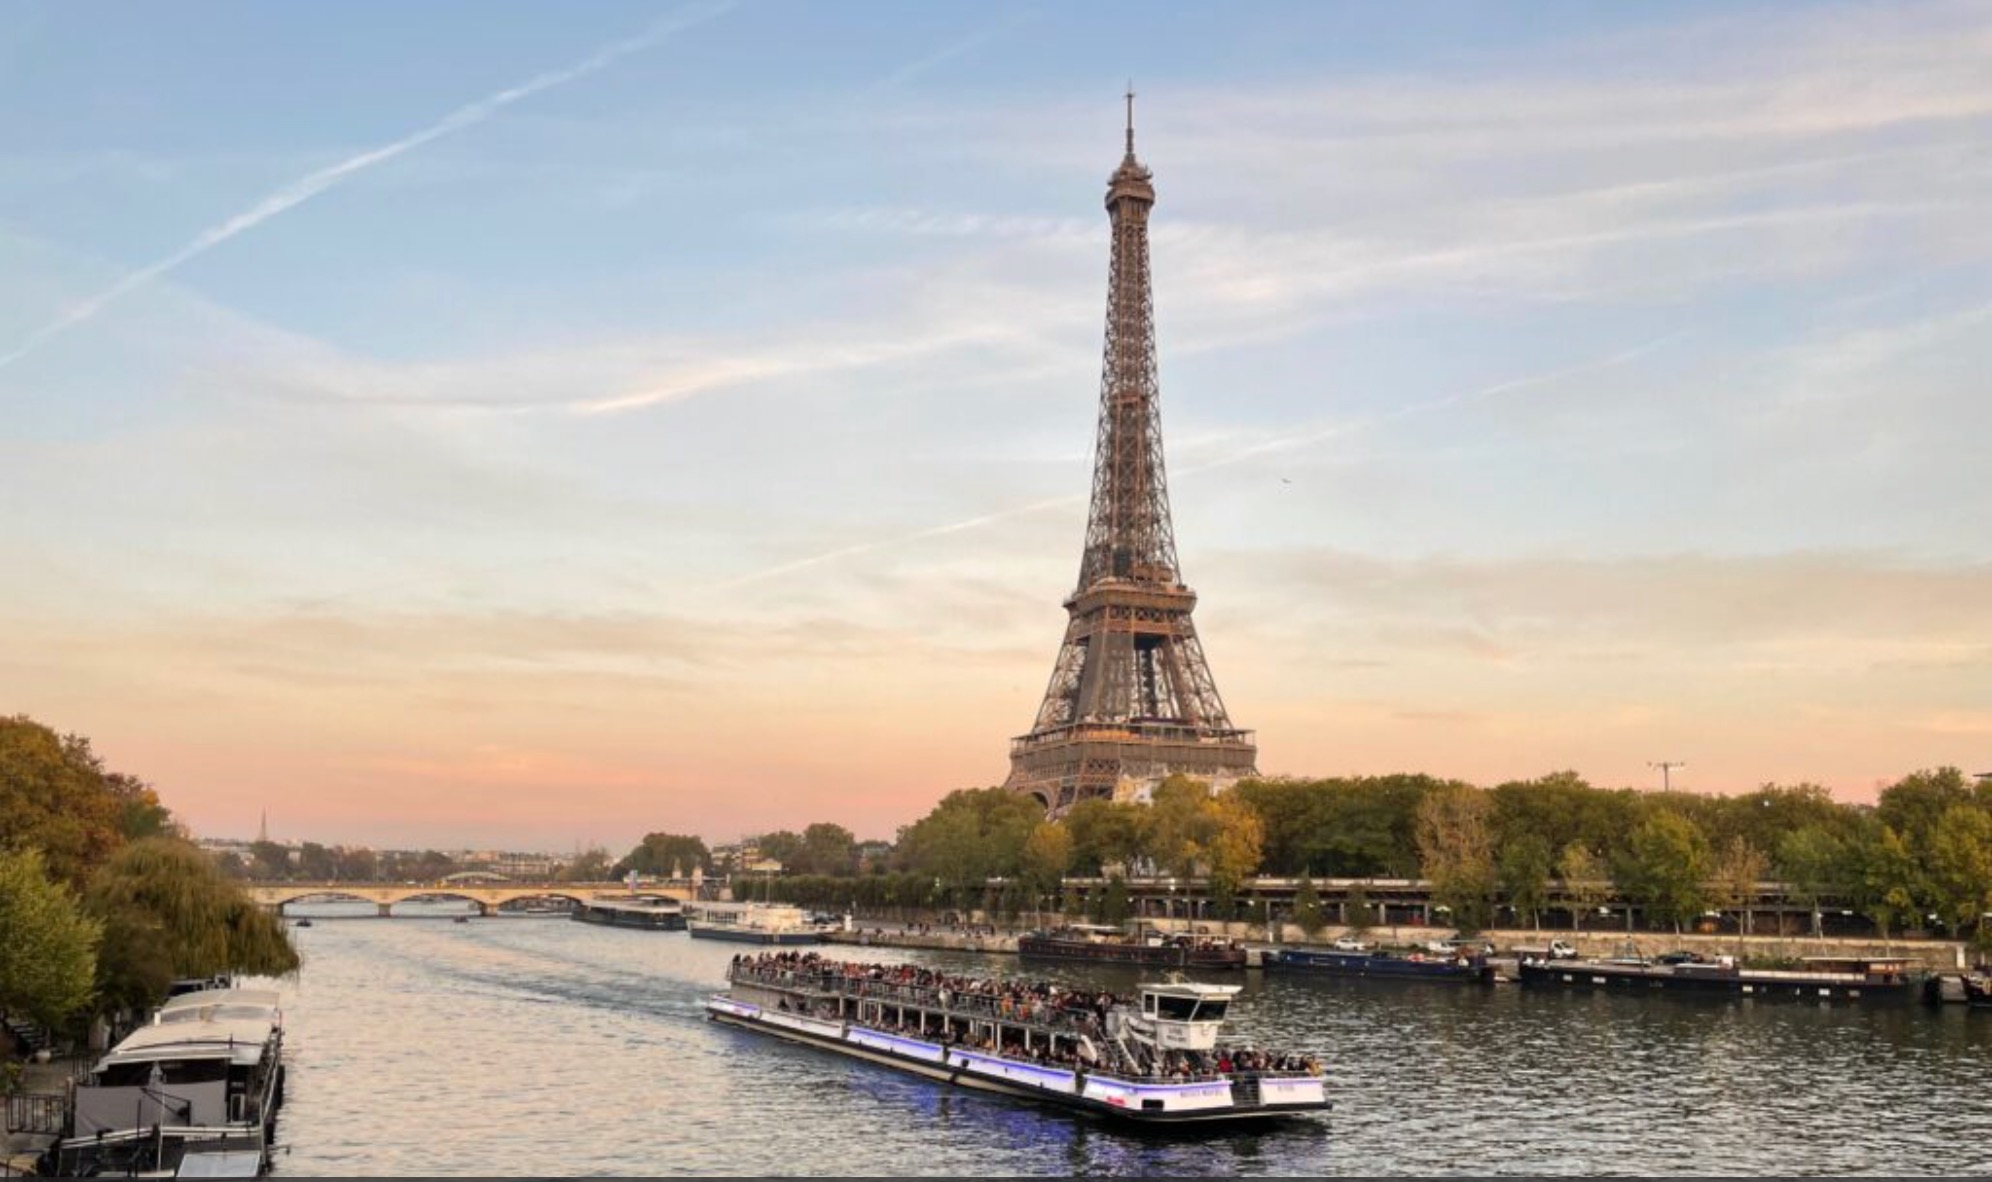 Bateaux Mouches on the Seine